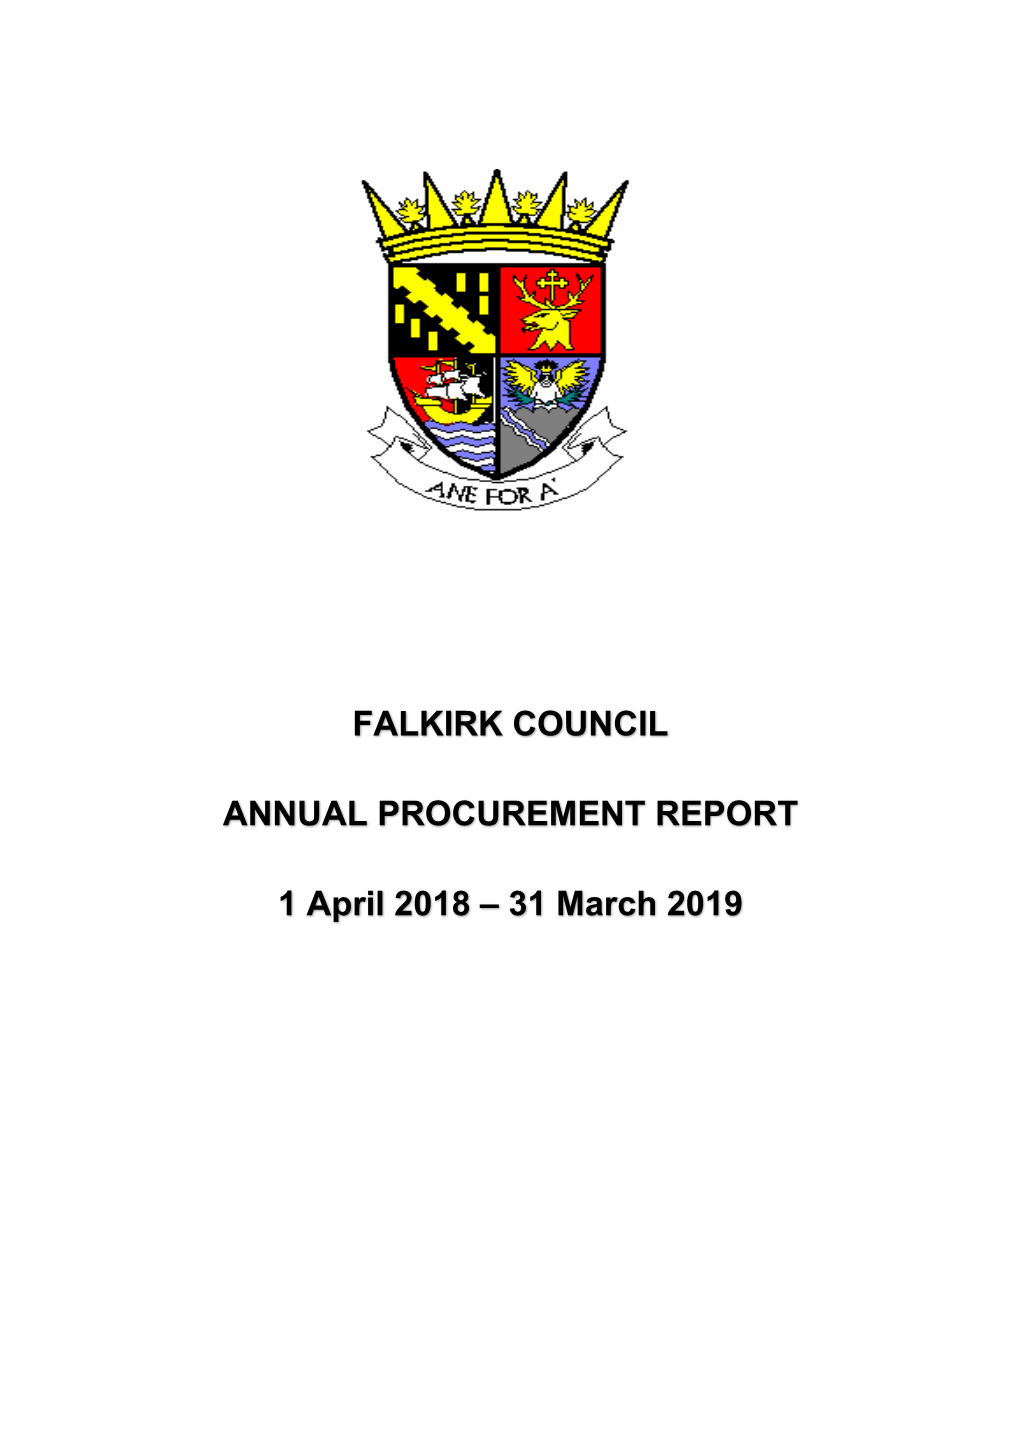 Annual Procurement Report 2018/2019